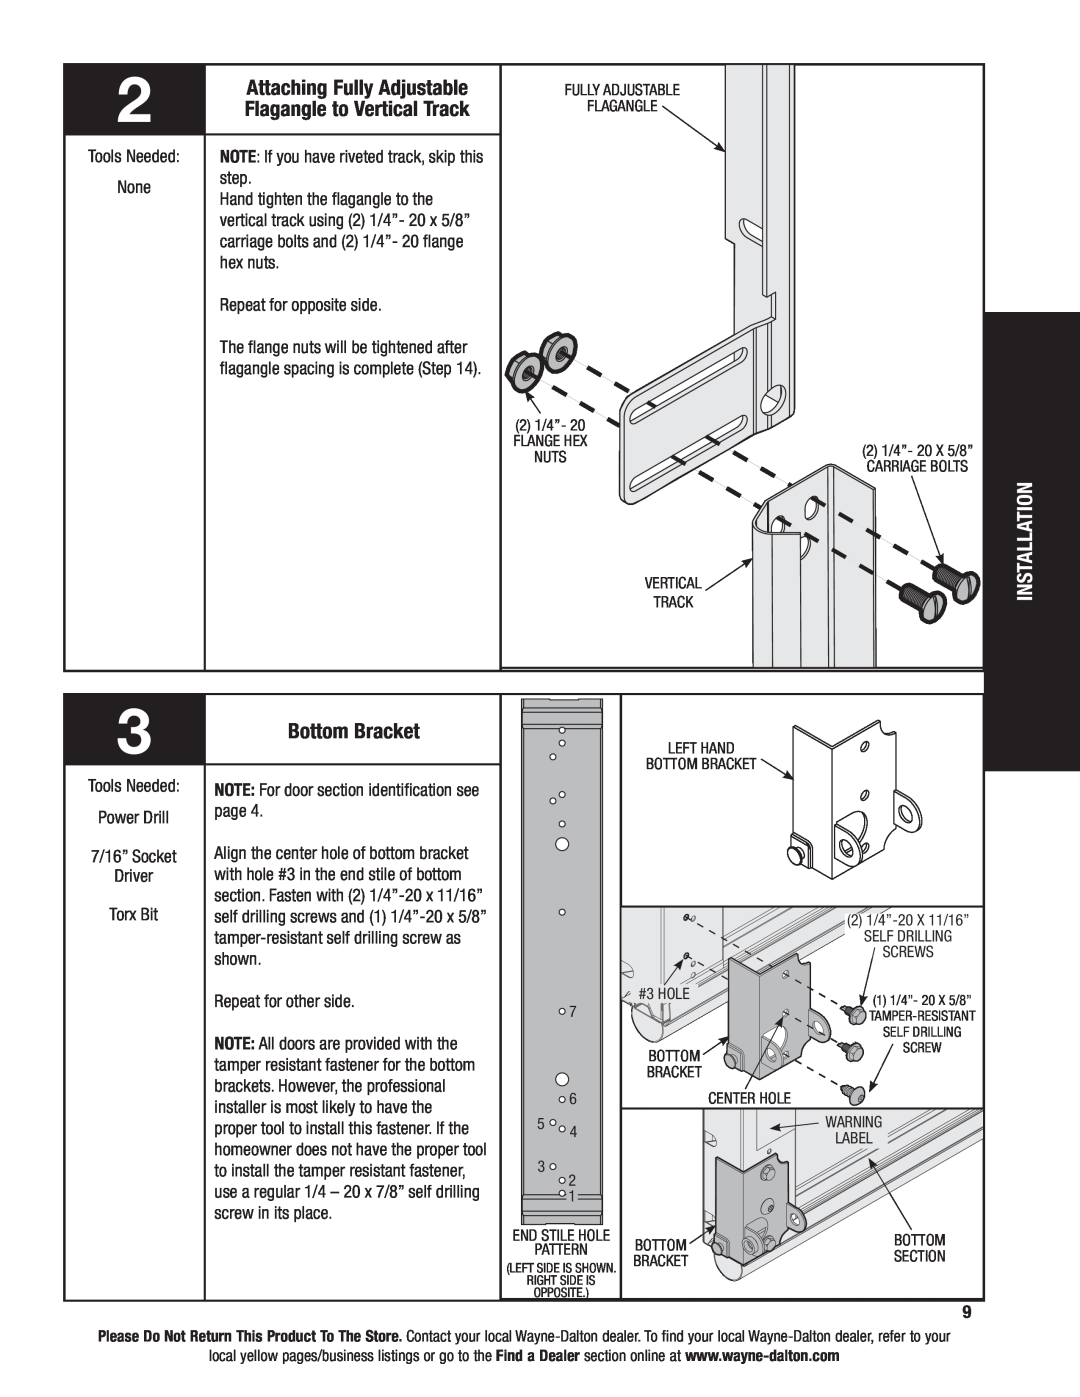 Wayne-Dalton 46 installation instructions Attaching Fully Adjustable, Flagangle to Vertical Track, Bottom Bracket 